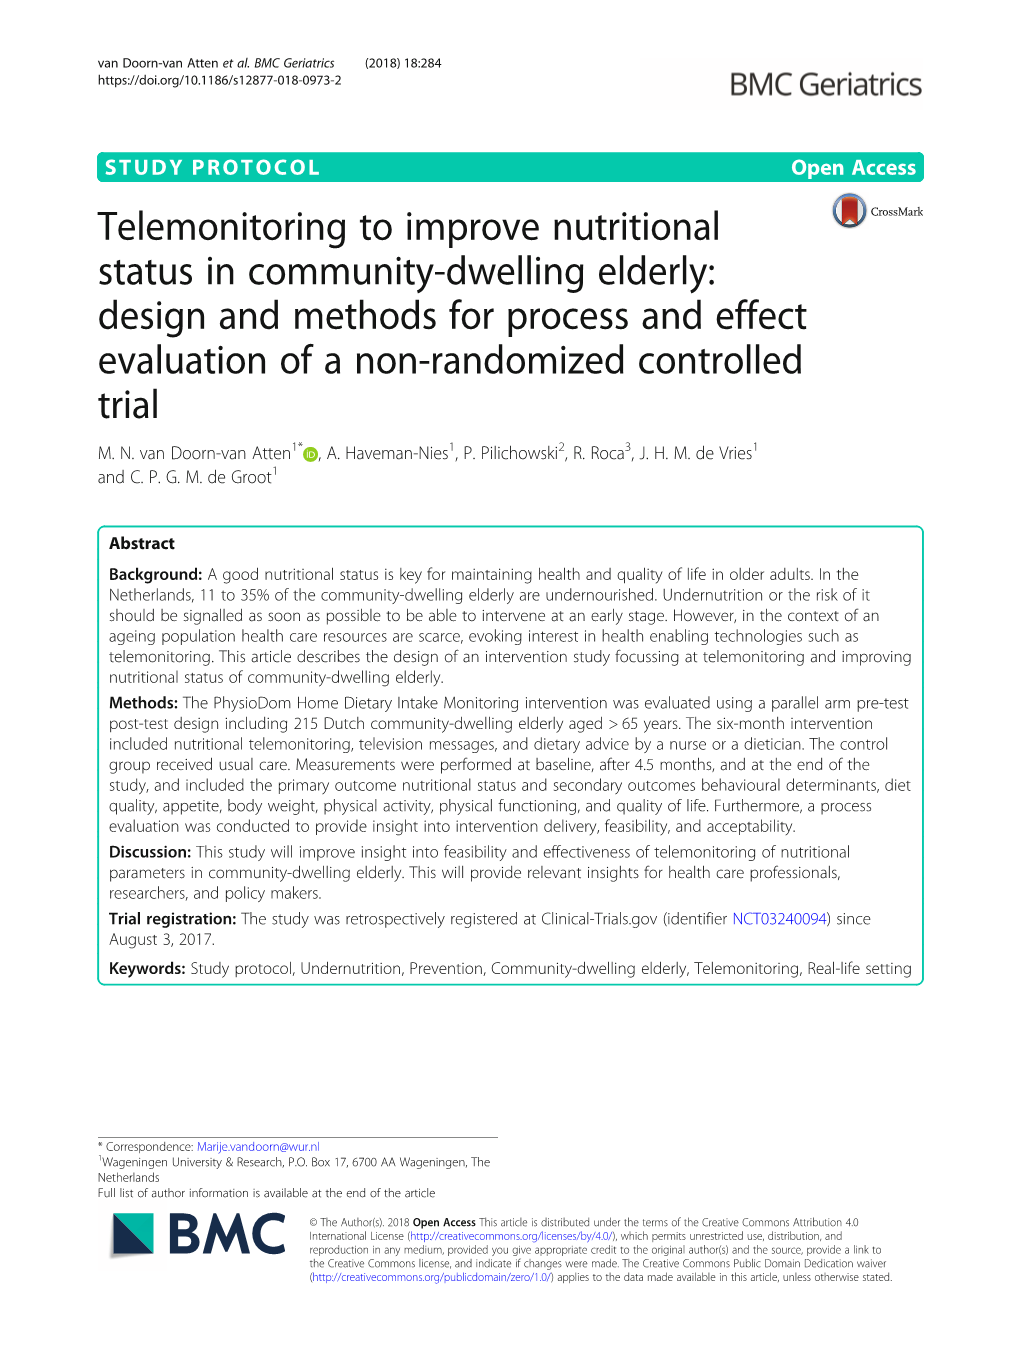 Telemonitoring to Improve Nutritional Status in Community-Dwelling Elderly